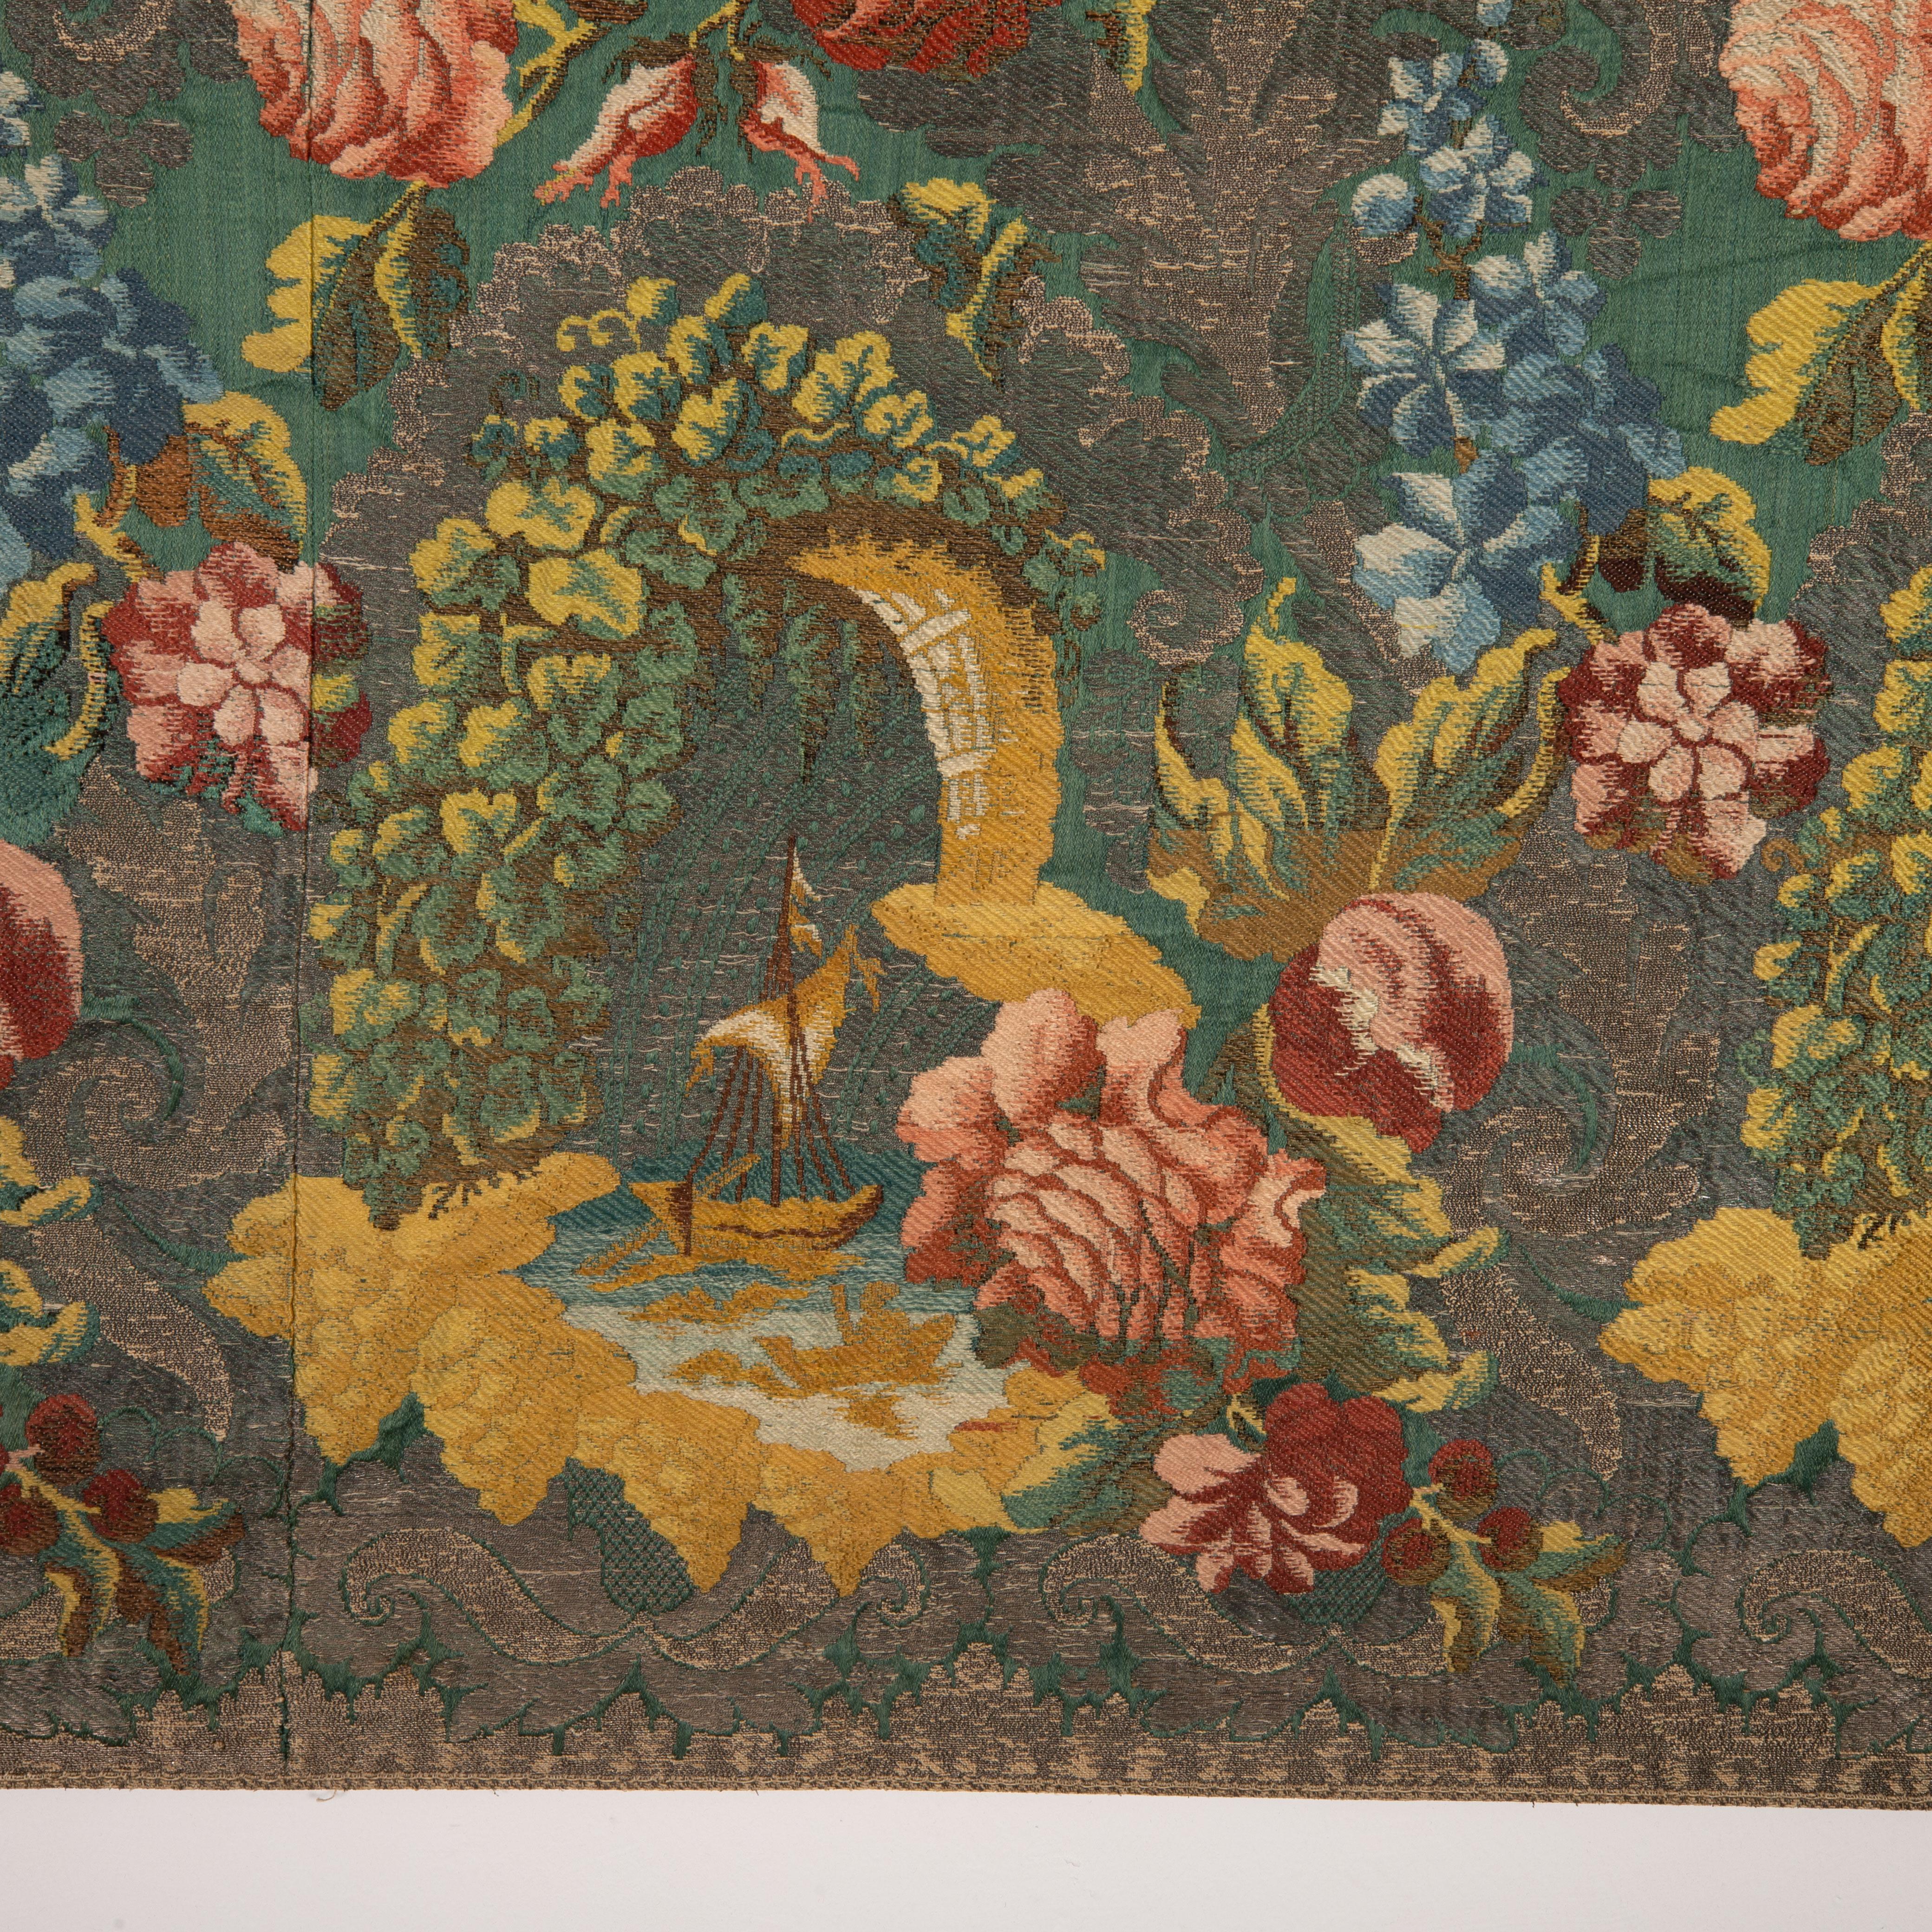 European Silk and Metallic Thread Brocaded Textile, 18th C. For Sale 1